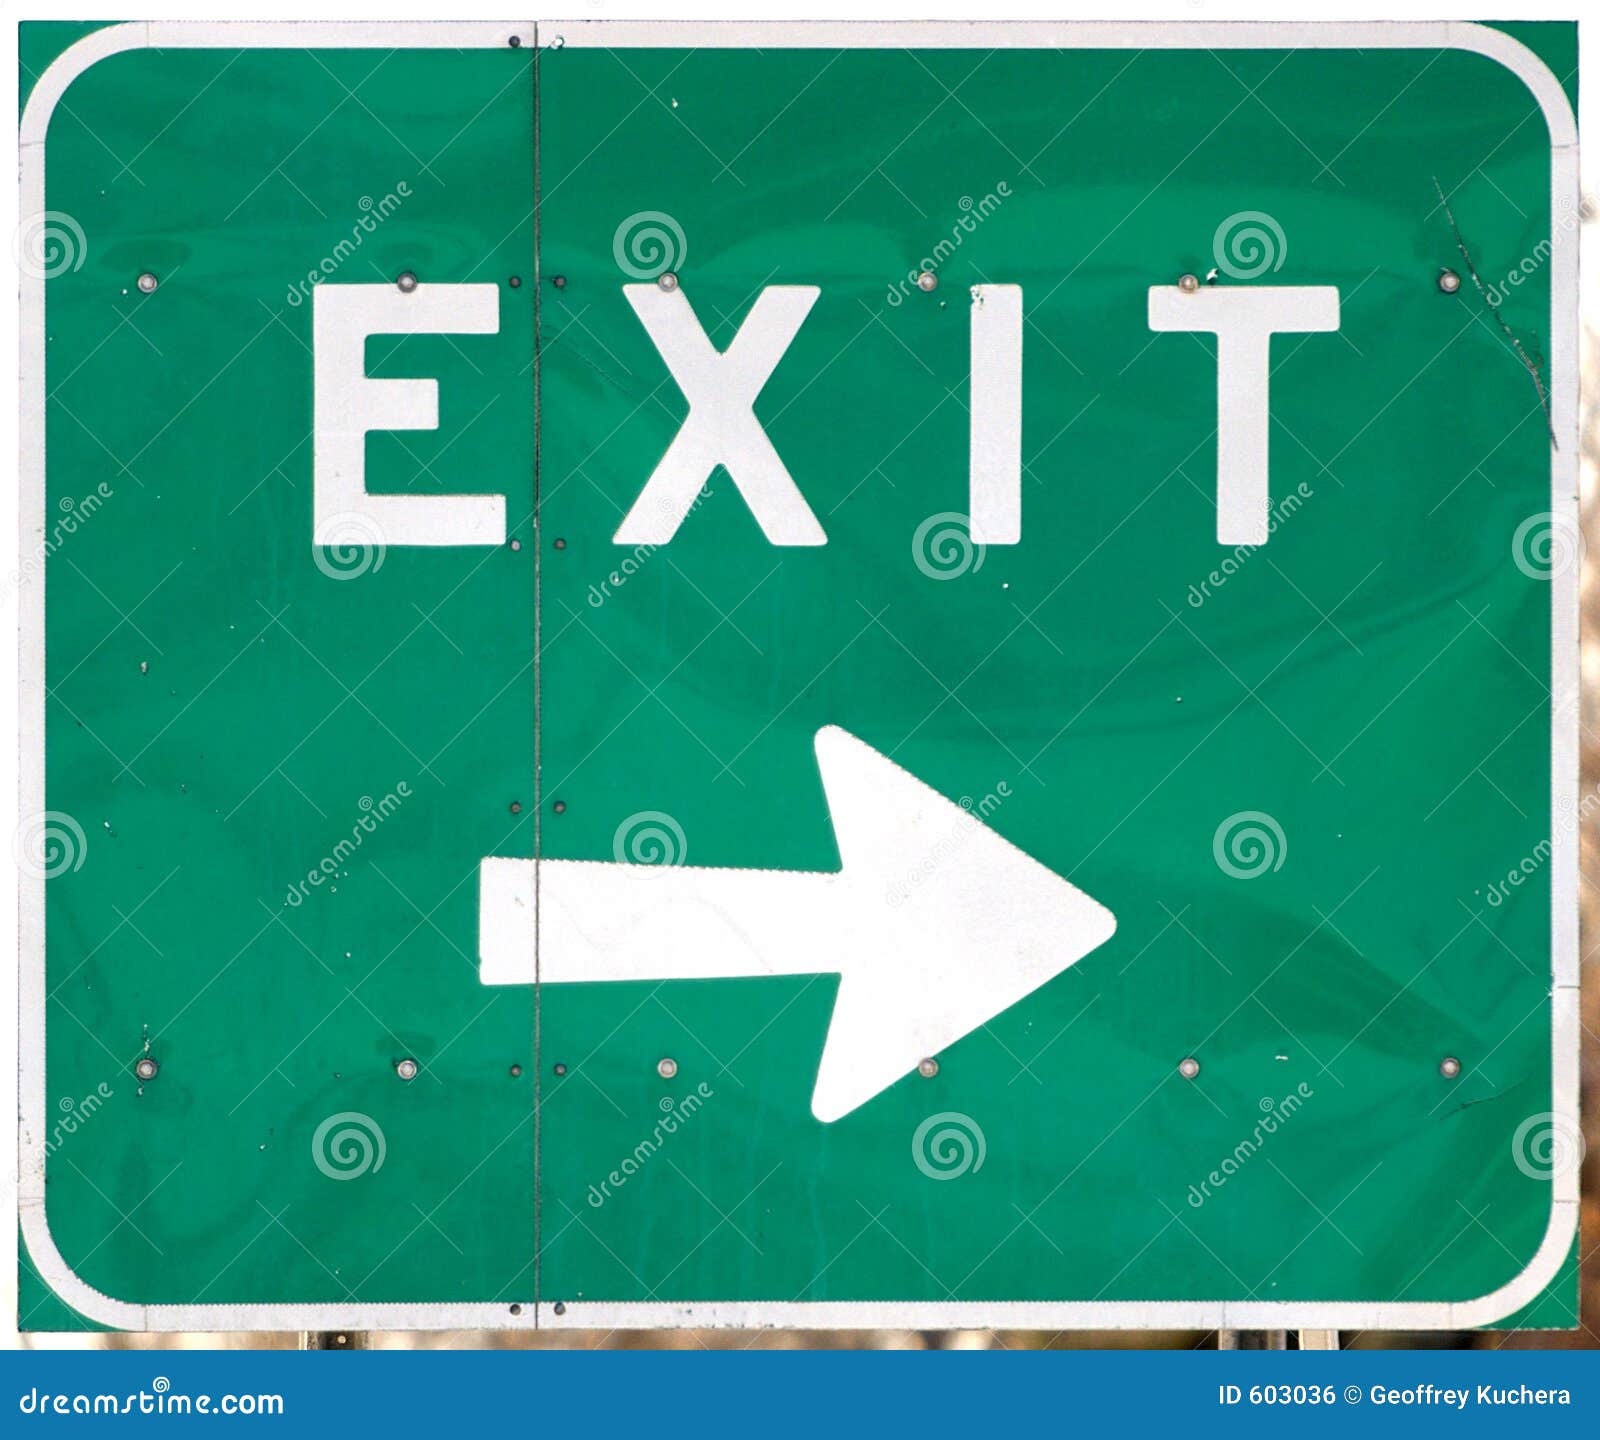 highway exit sign